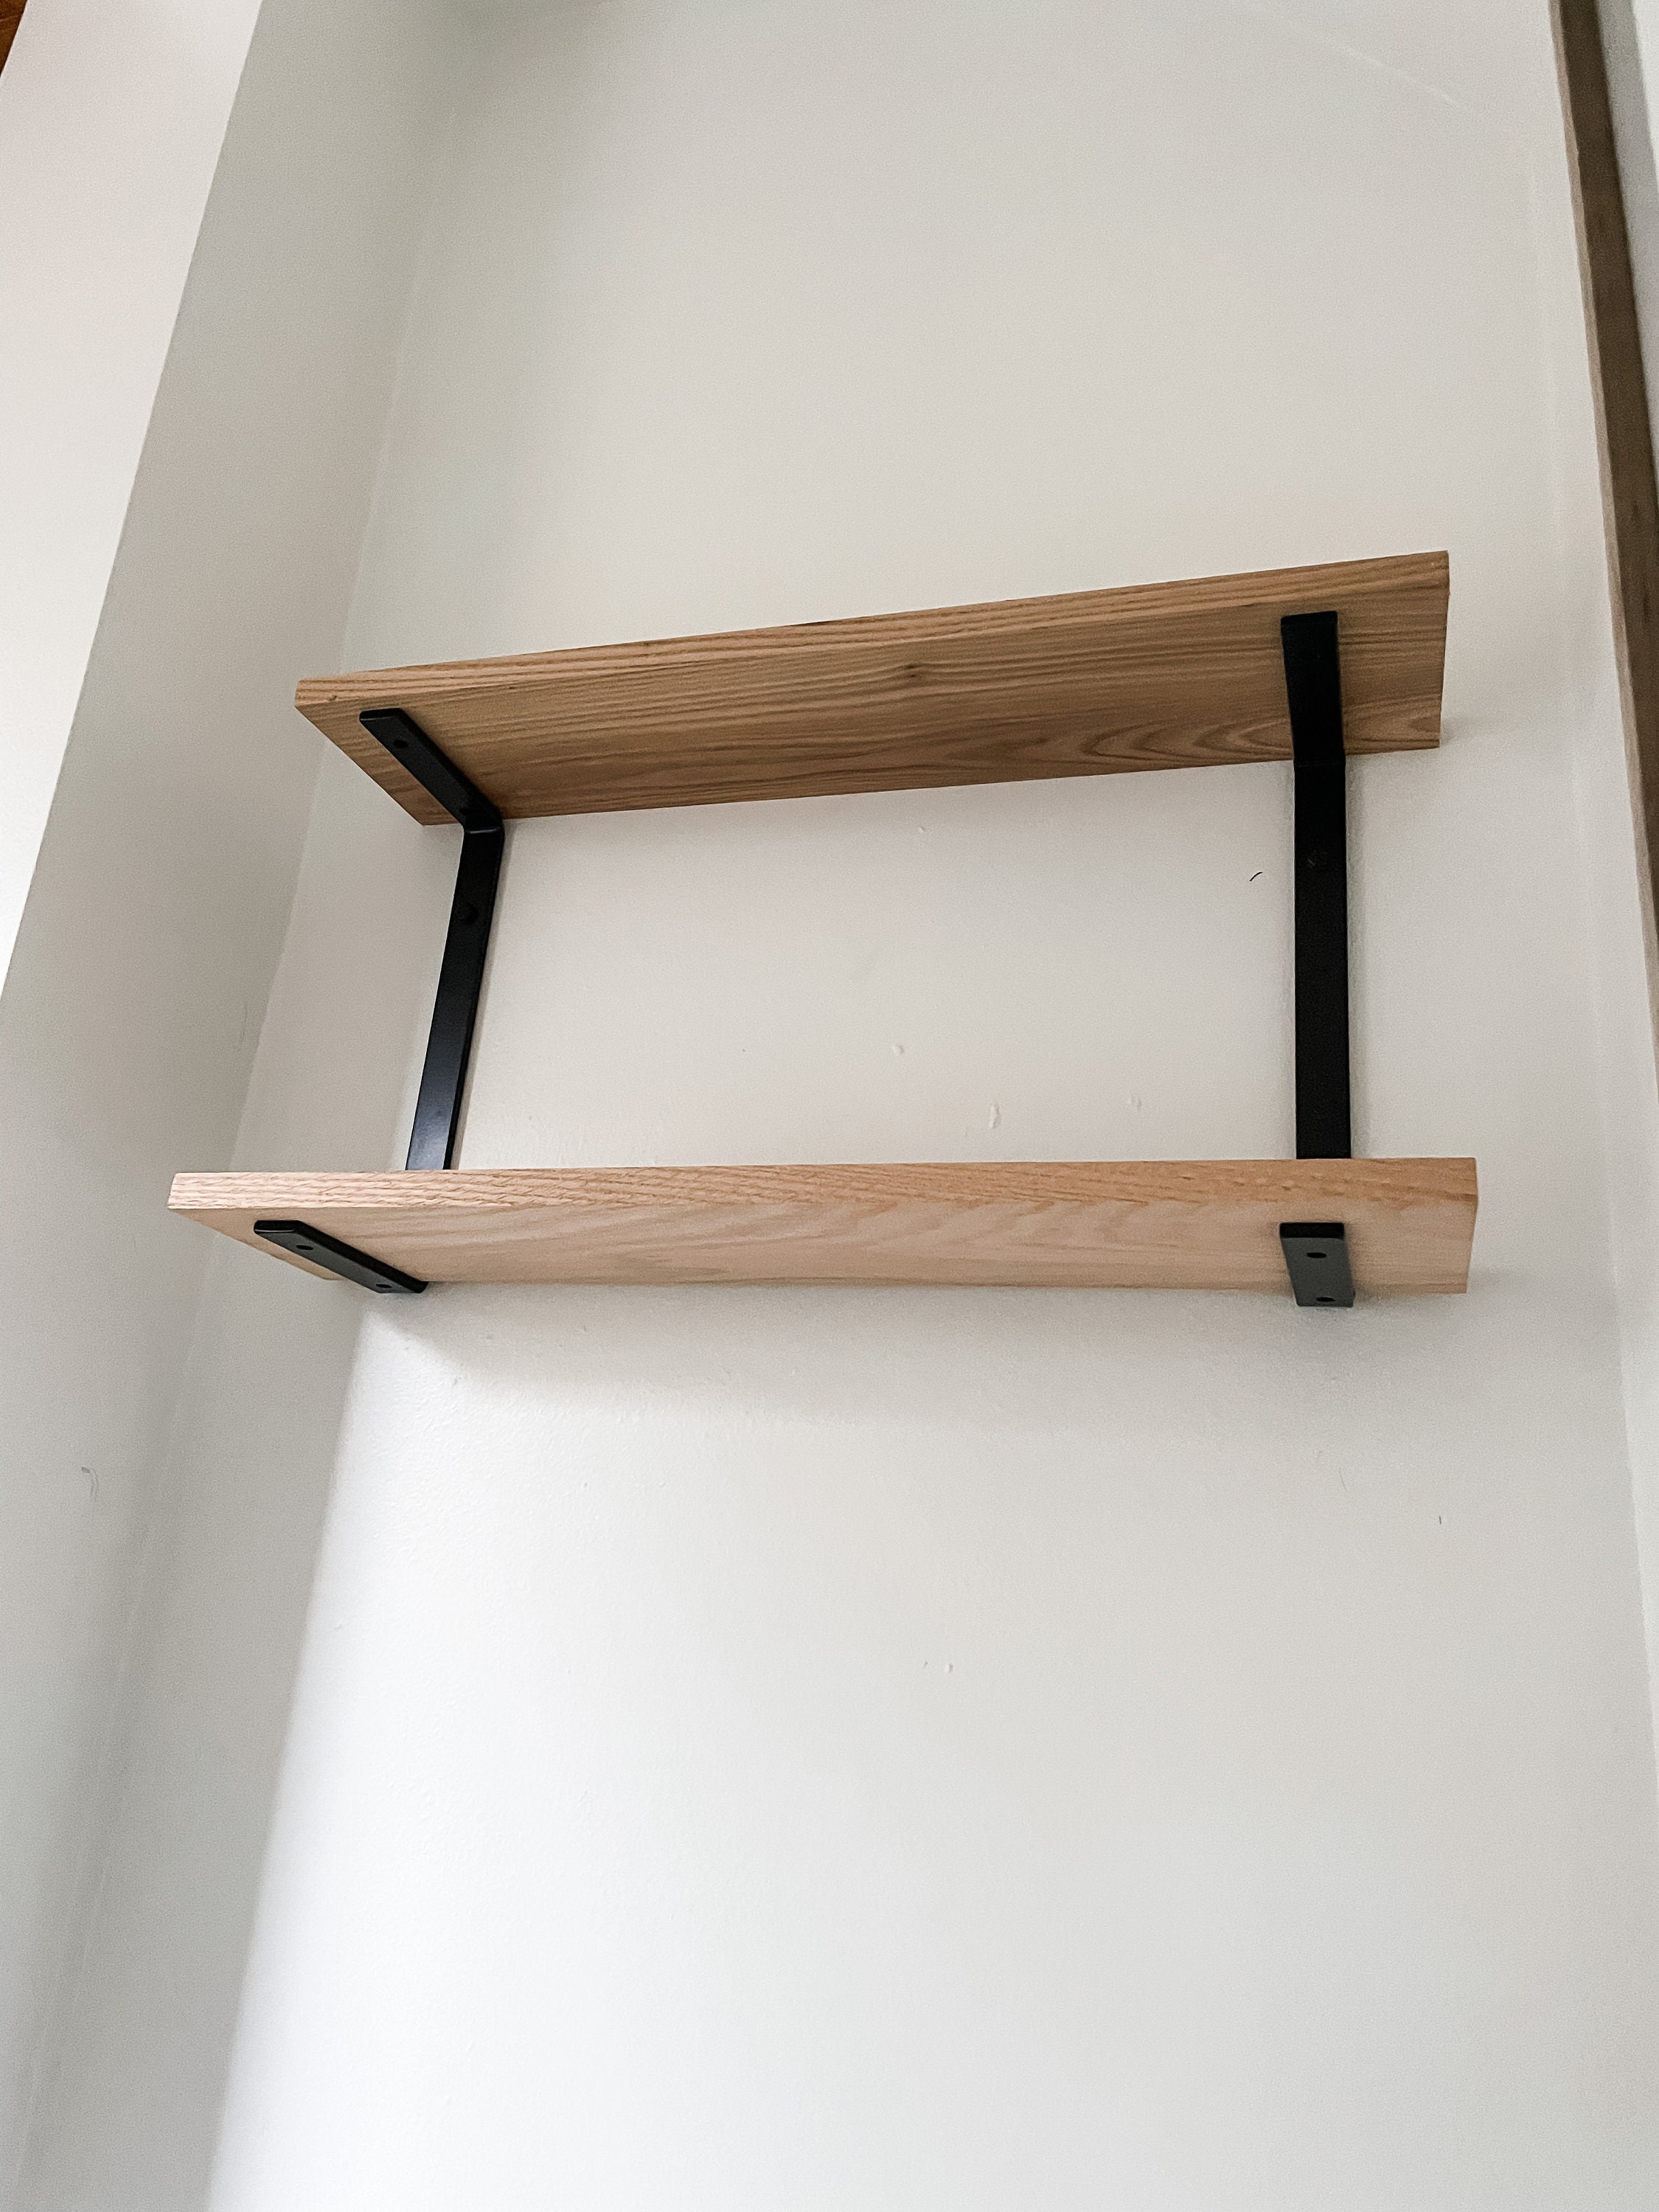 Cutelife Wooden Double Shelf Storage 